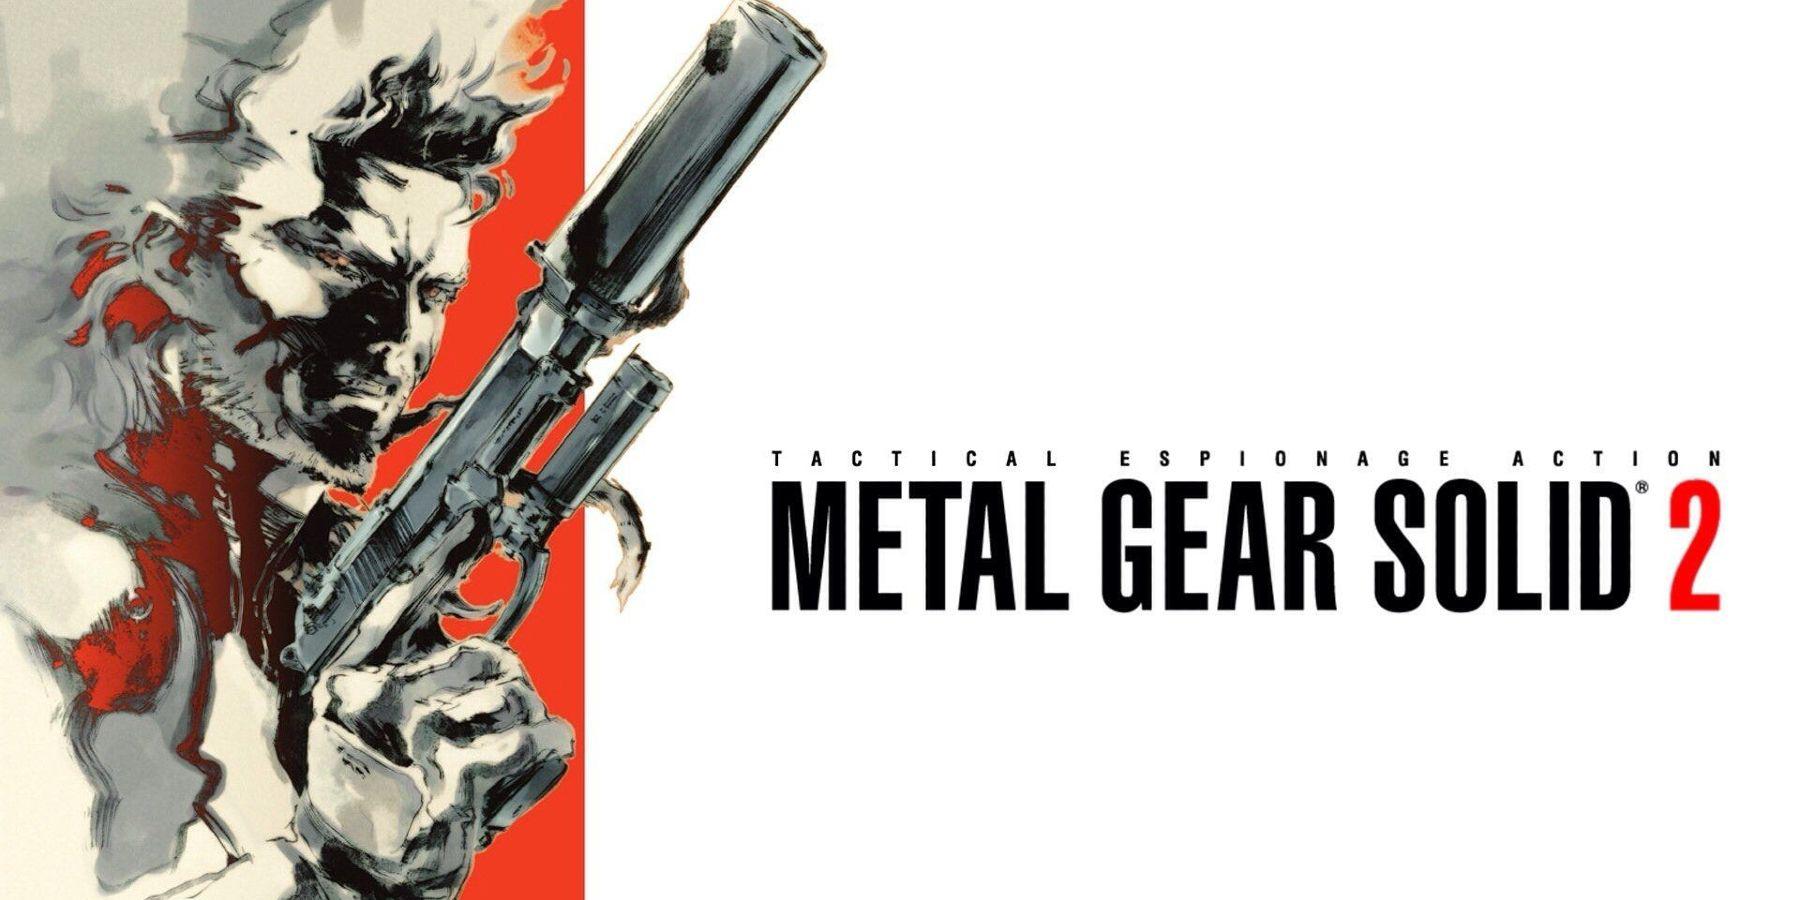 Hideo Kojima quase desistiu após Metal Gear Solid 2